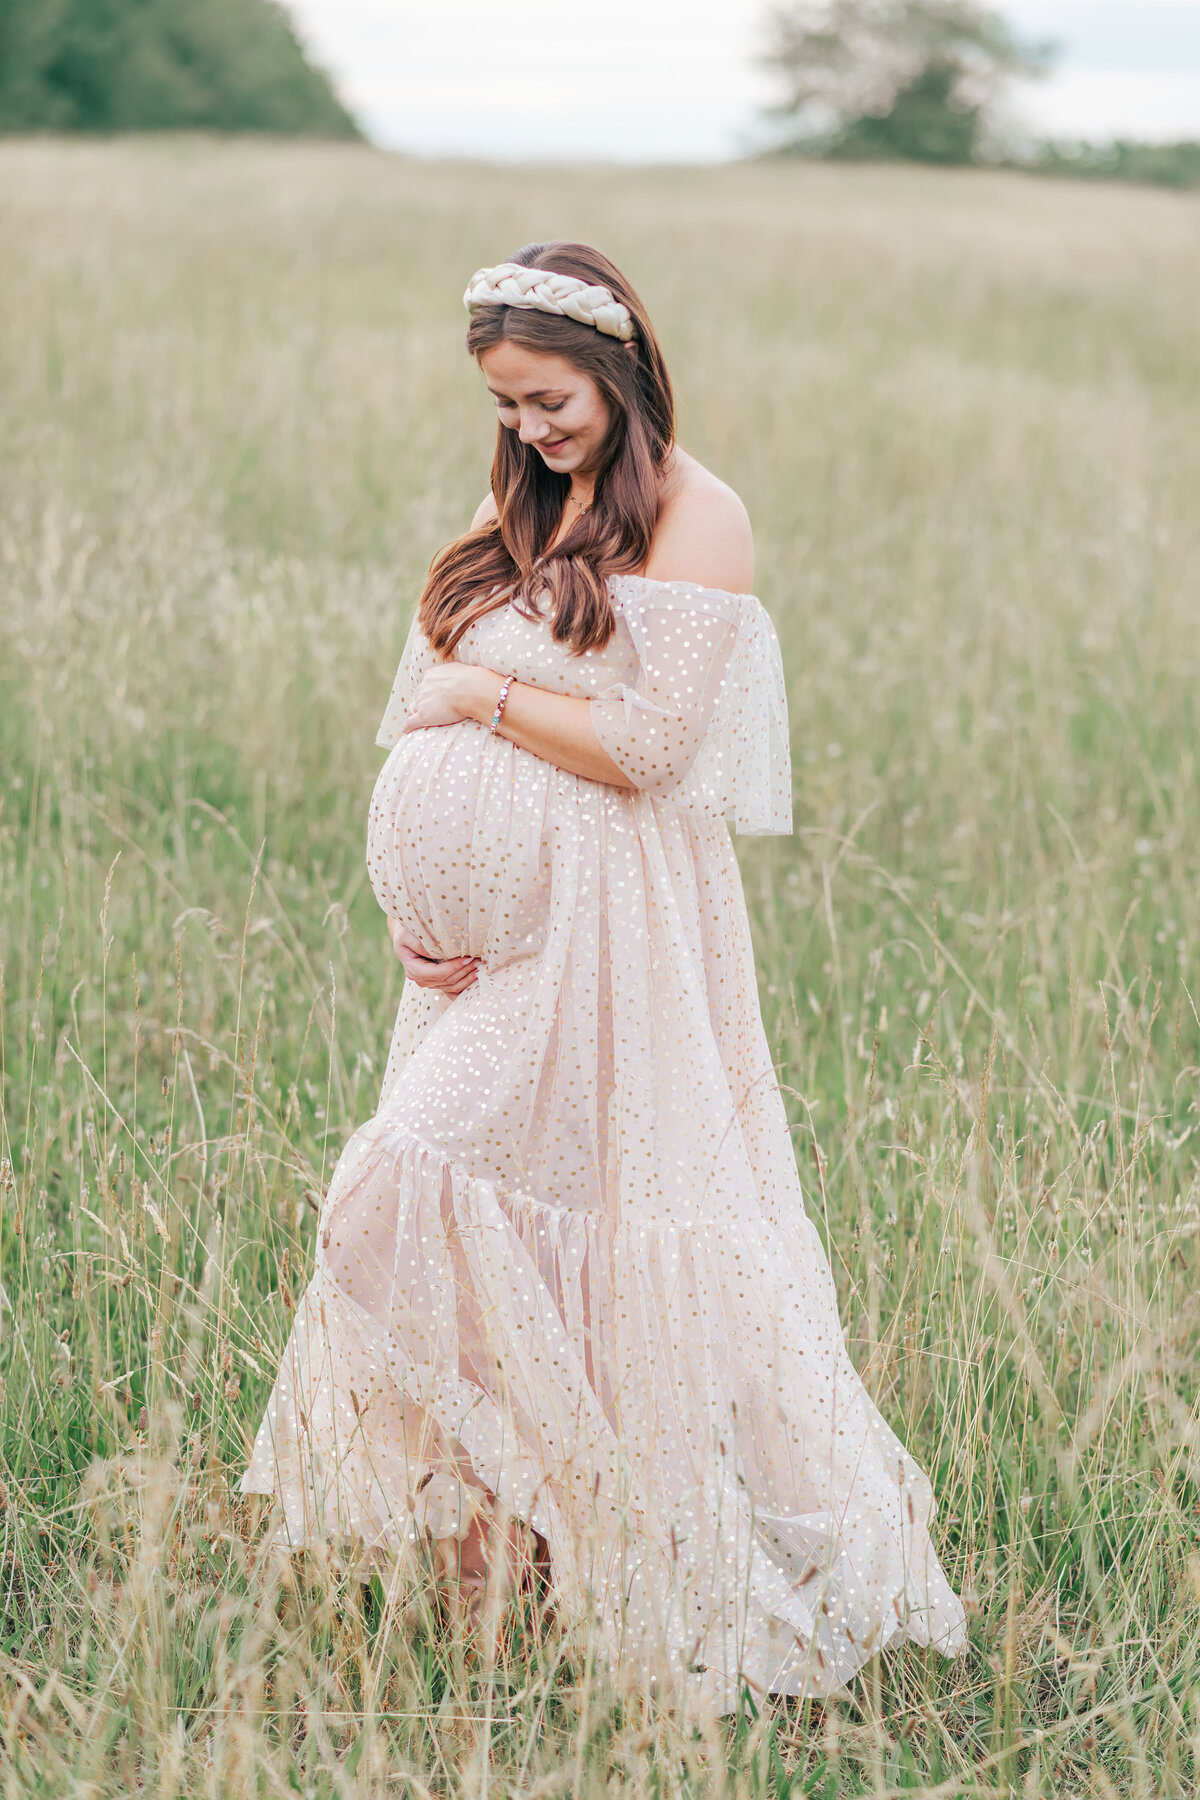 Greenville Maternity Photographer Lauren-4